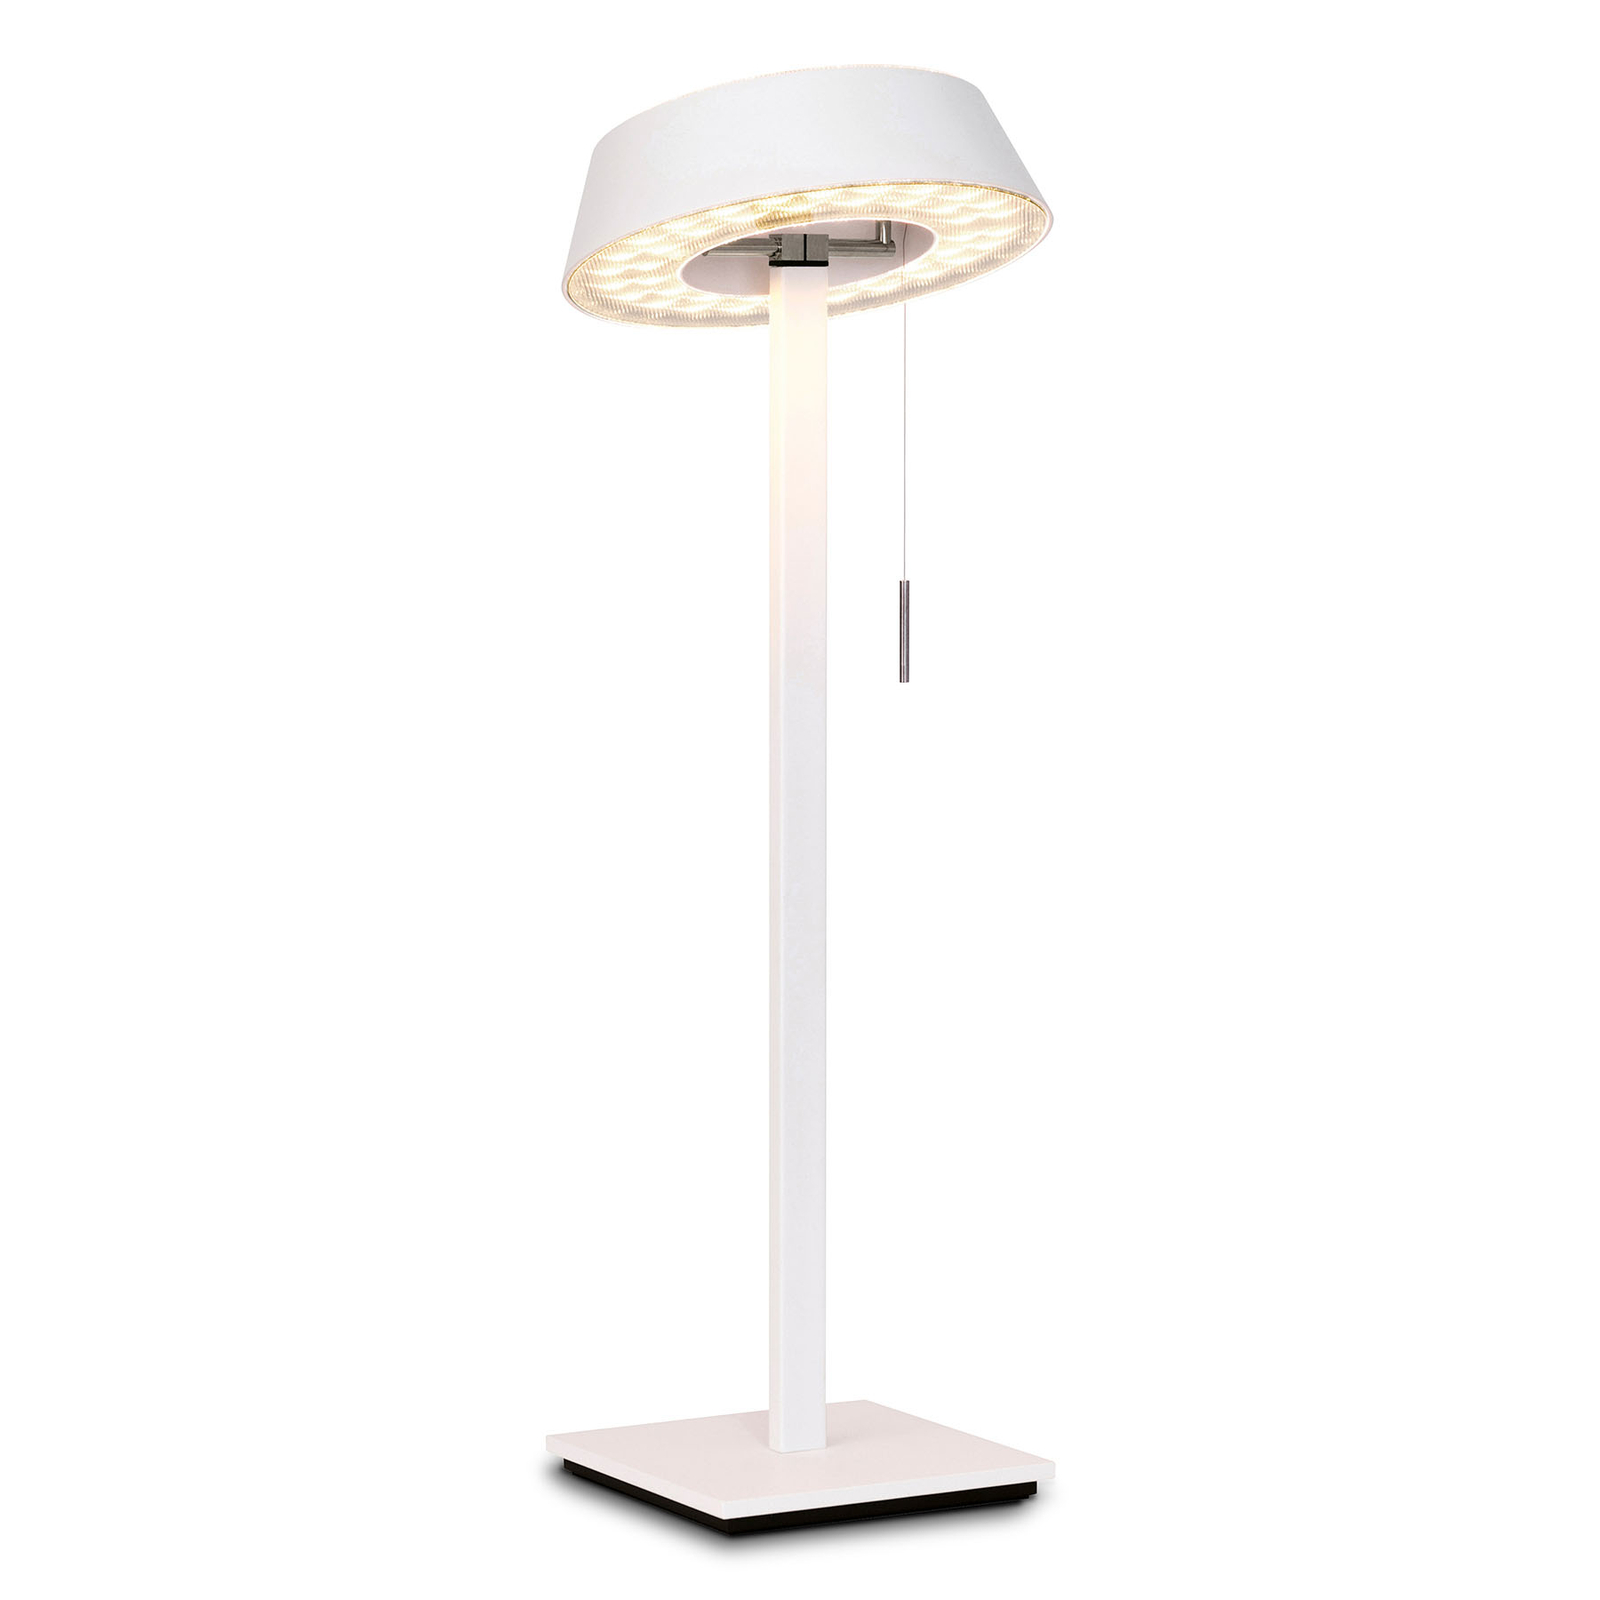 OLIGO Glance lampe à poser LED blanche mate